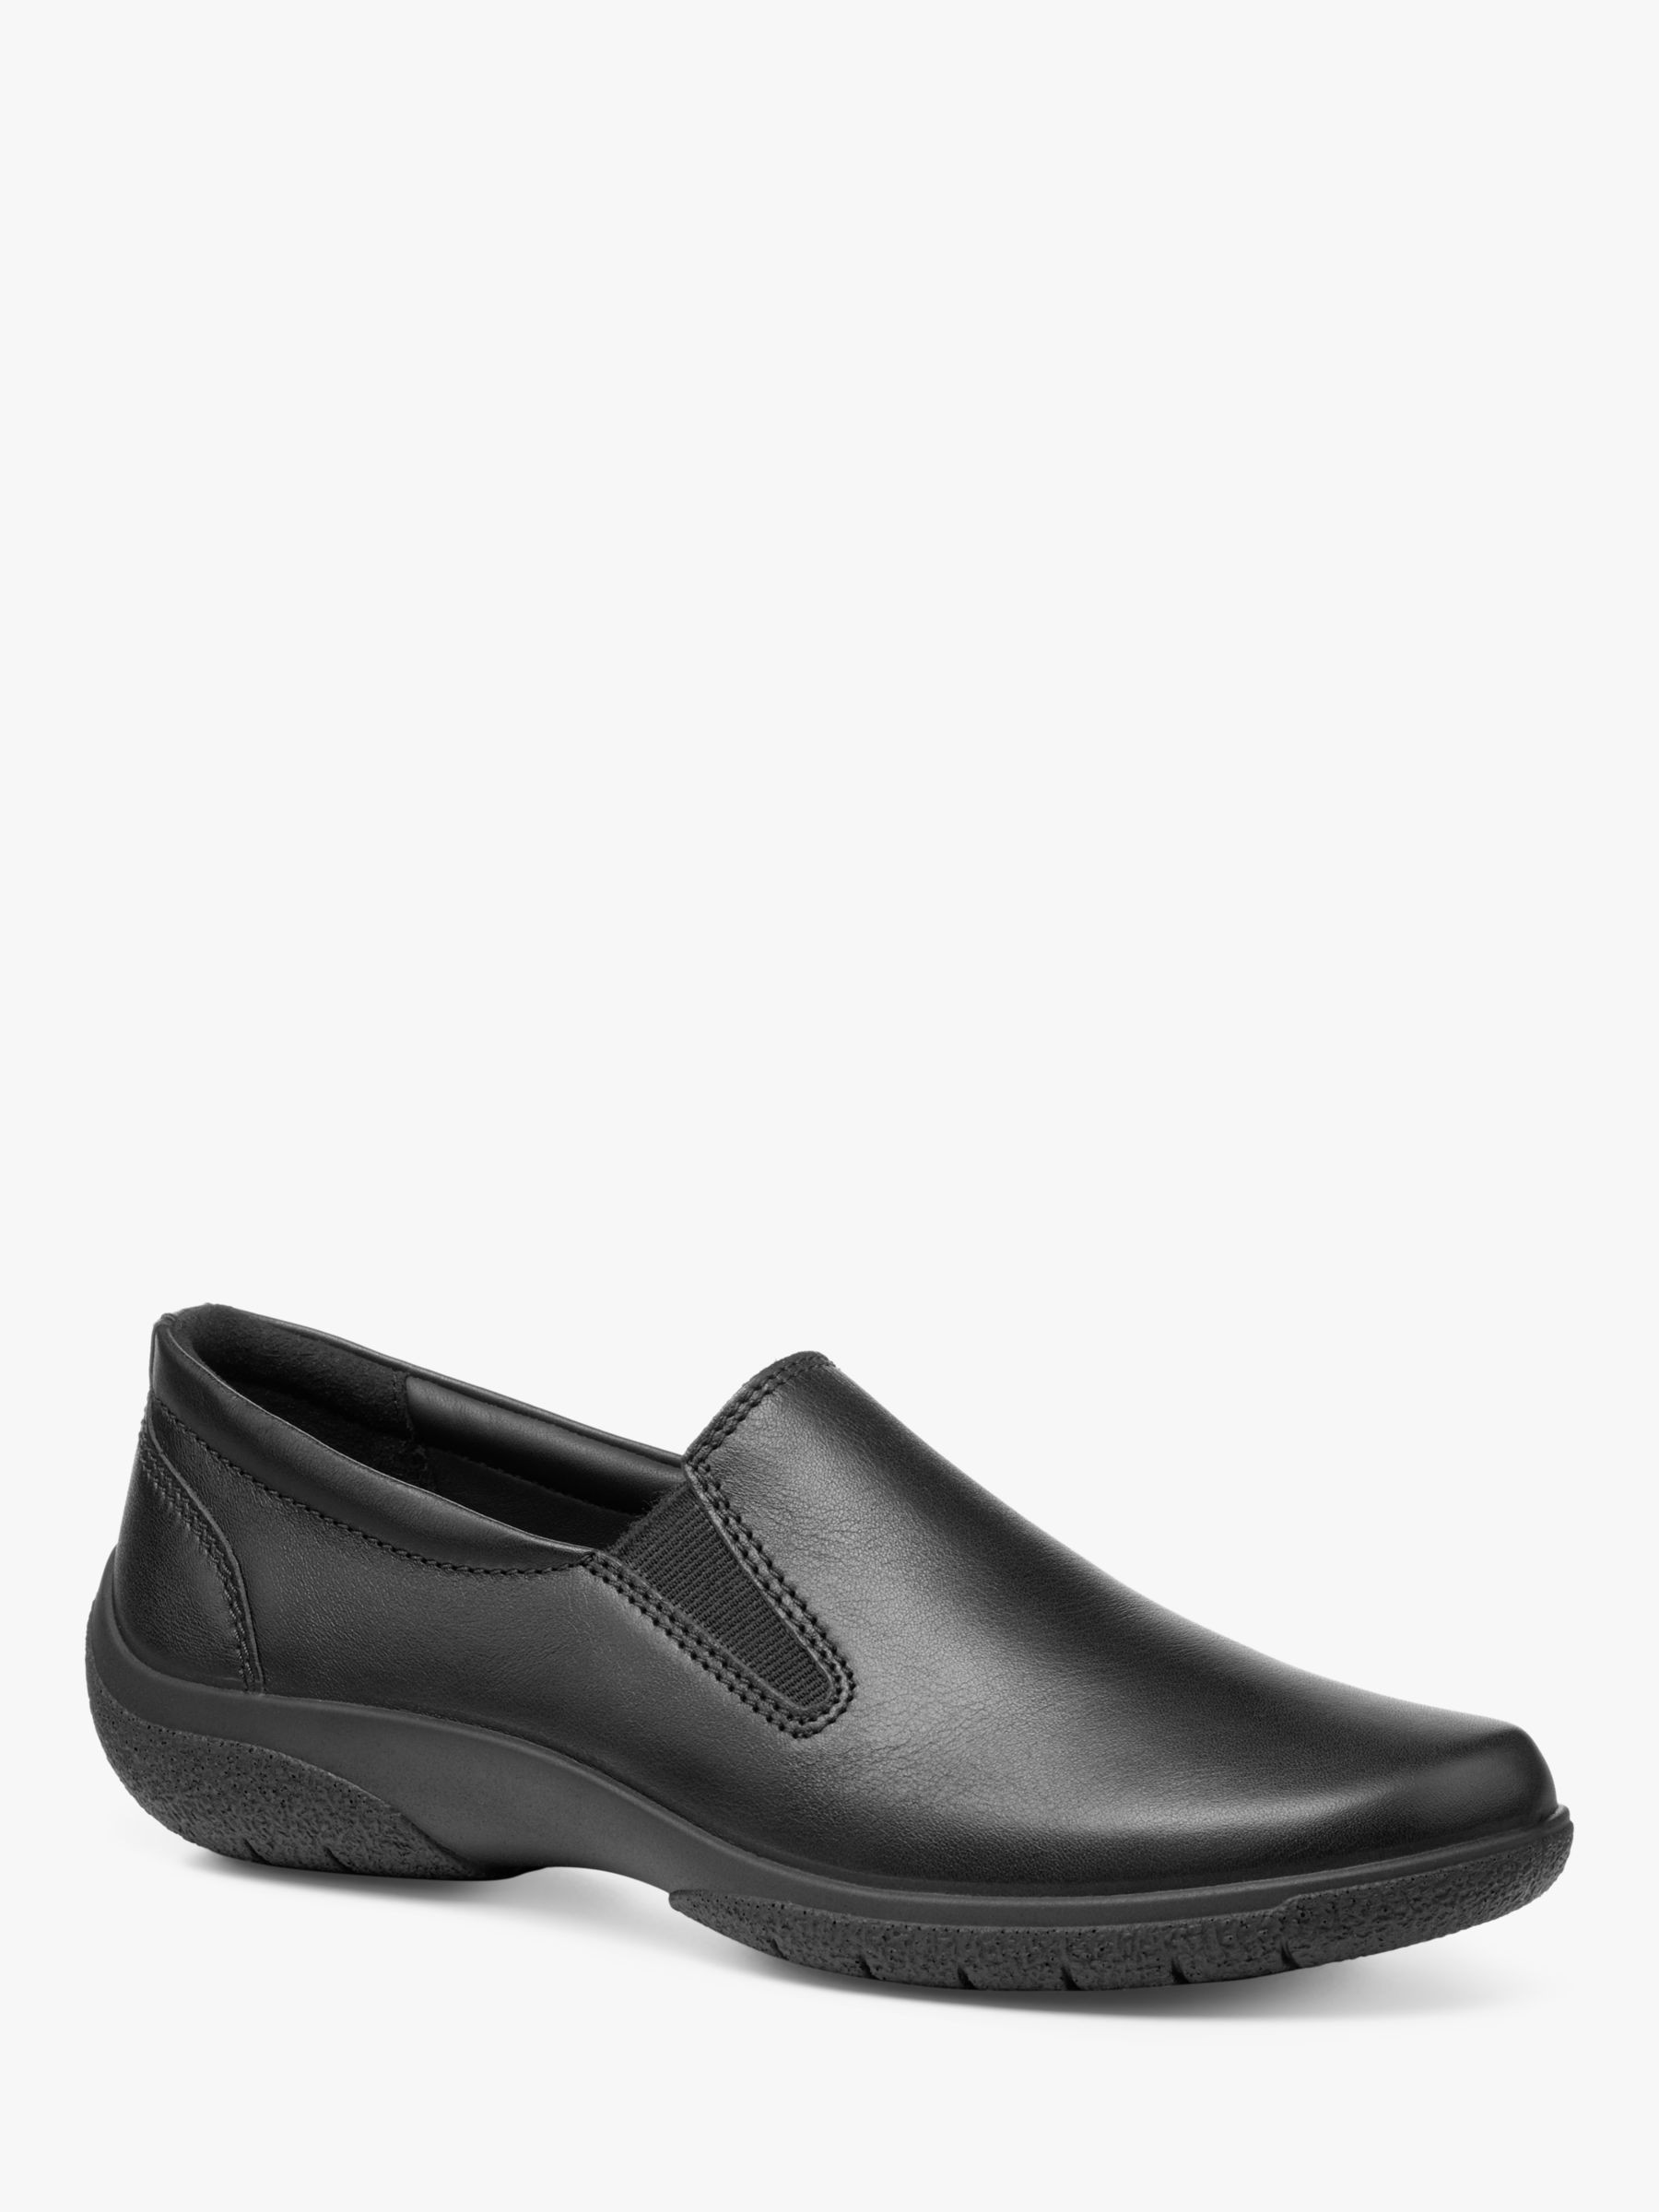 Buy Hotter Glove II Wide Fit Leather Slip-On Shoes, Black Online at johnlewis.com